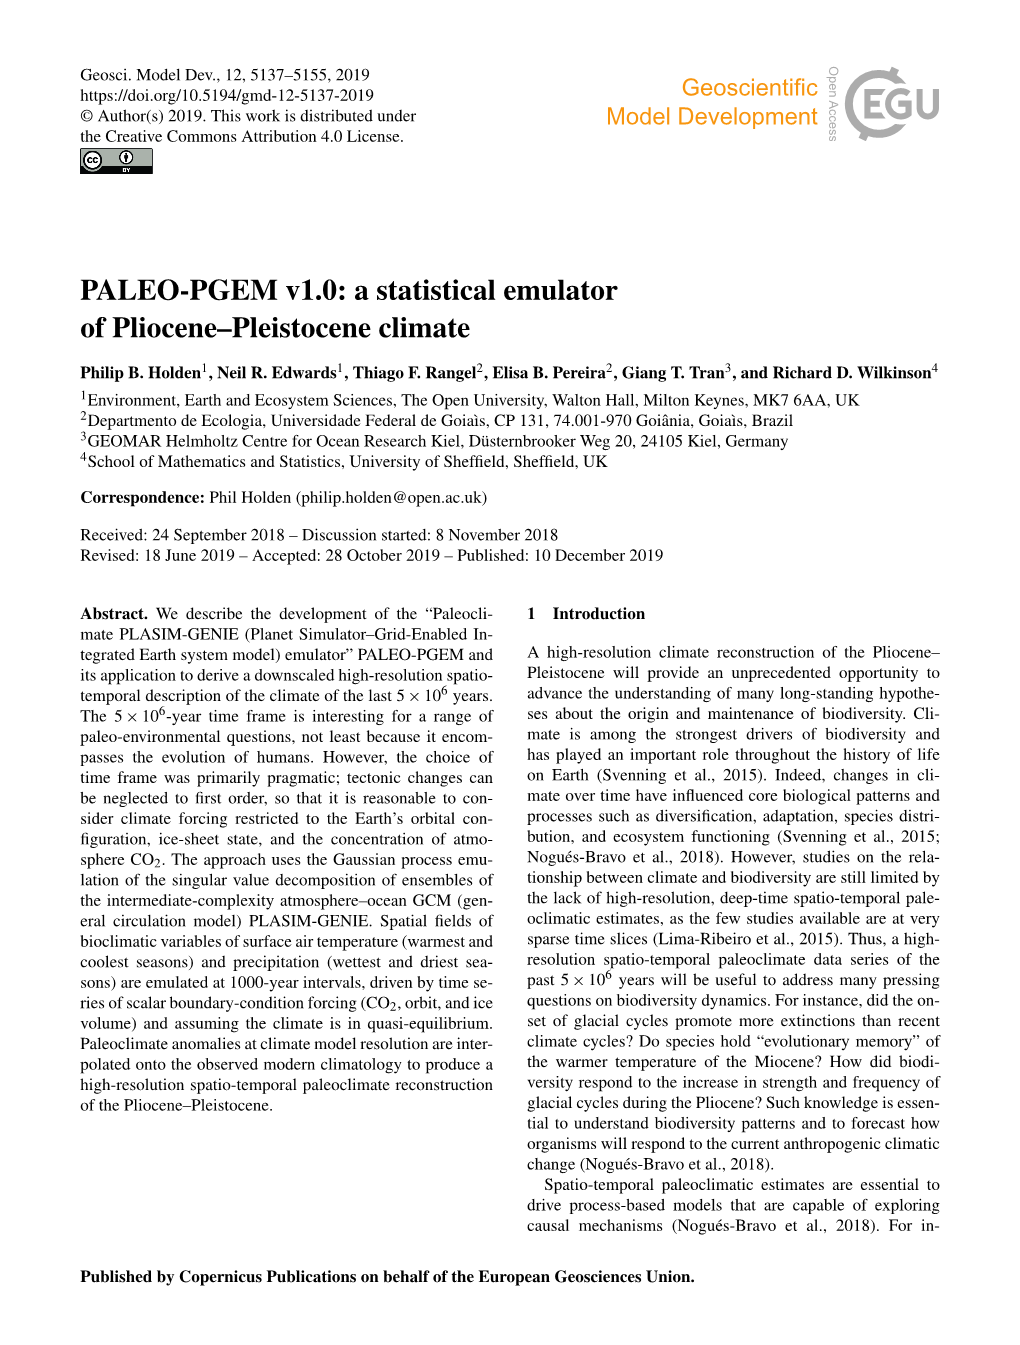 PALEO-PGEM V1.0: a Statistical Emulator of Pliocene–Pleistocene Climate